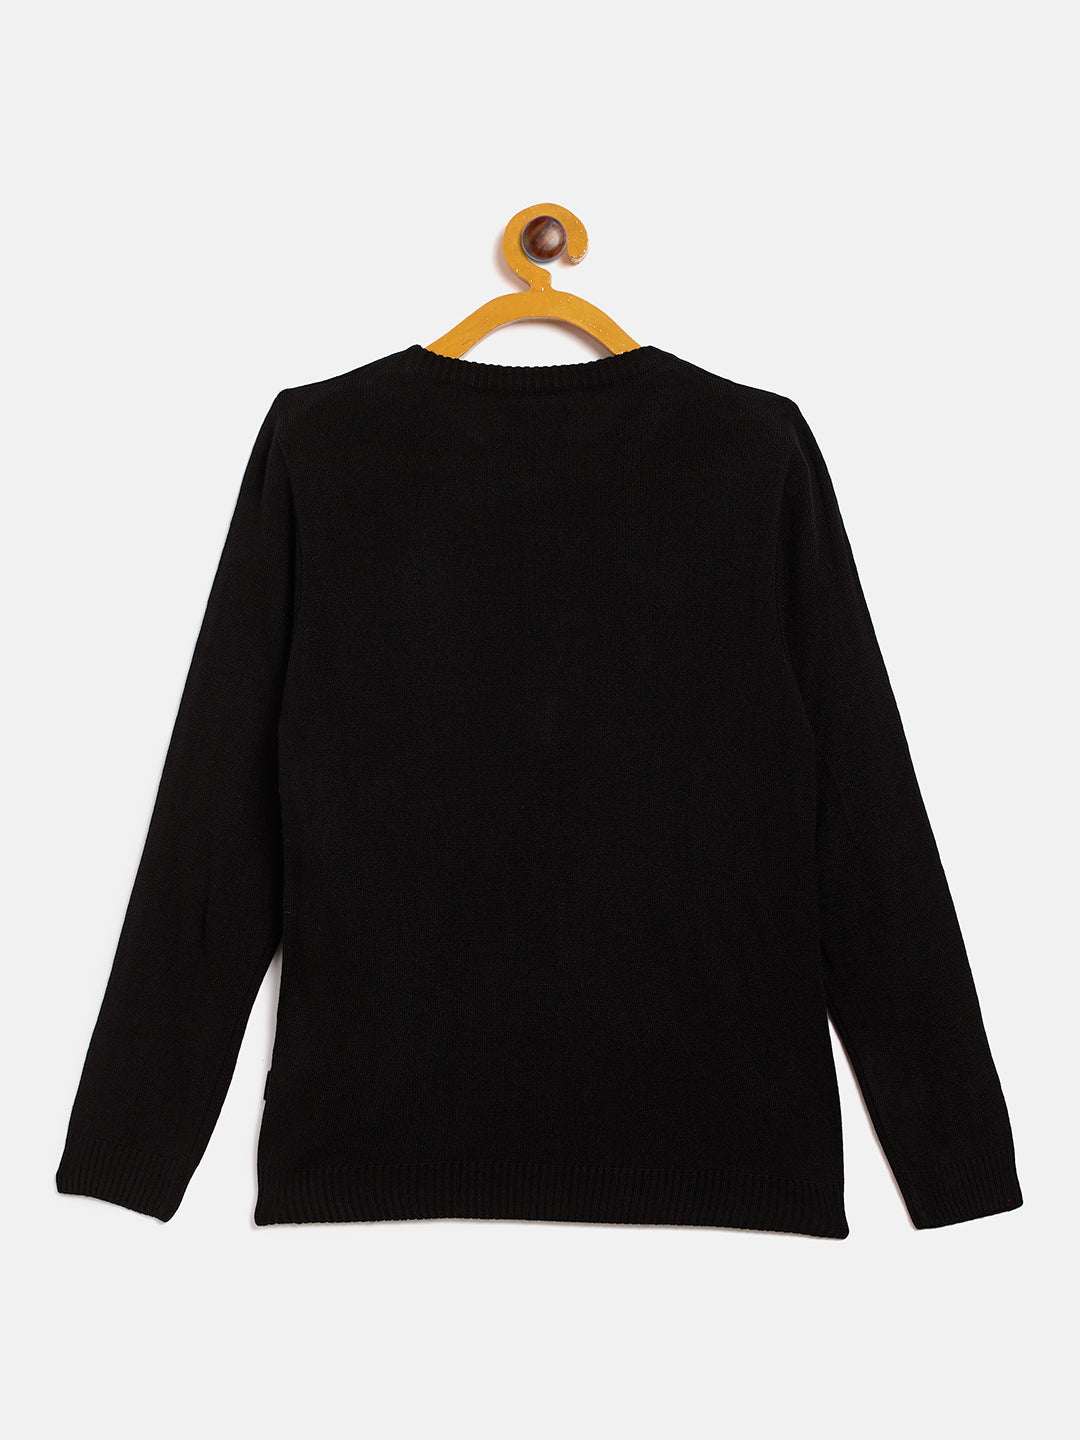 Black Embellished Round Neck Sweater - Girls Sweaters